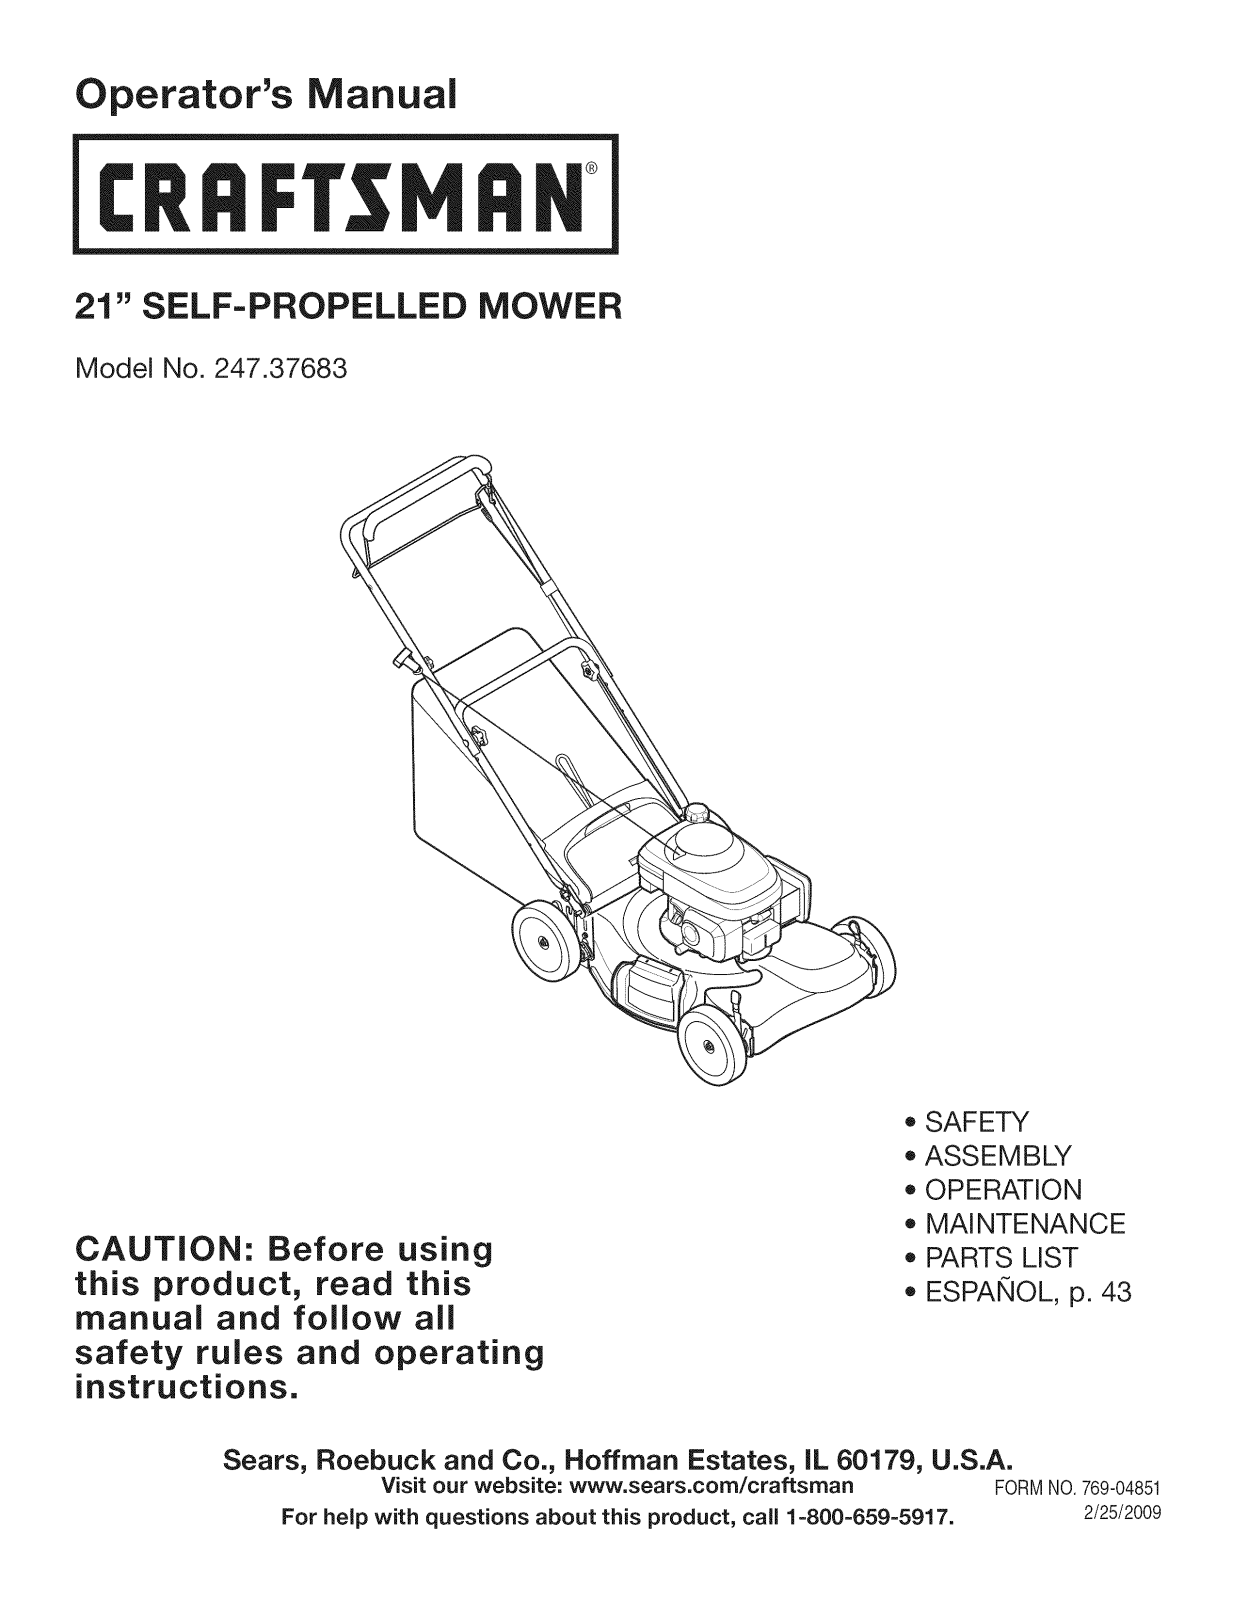 Craftsman 247376830, 12A-469Q799 Owner’s Manual